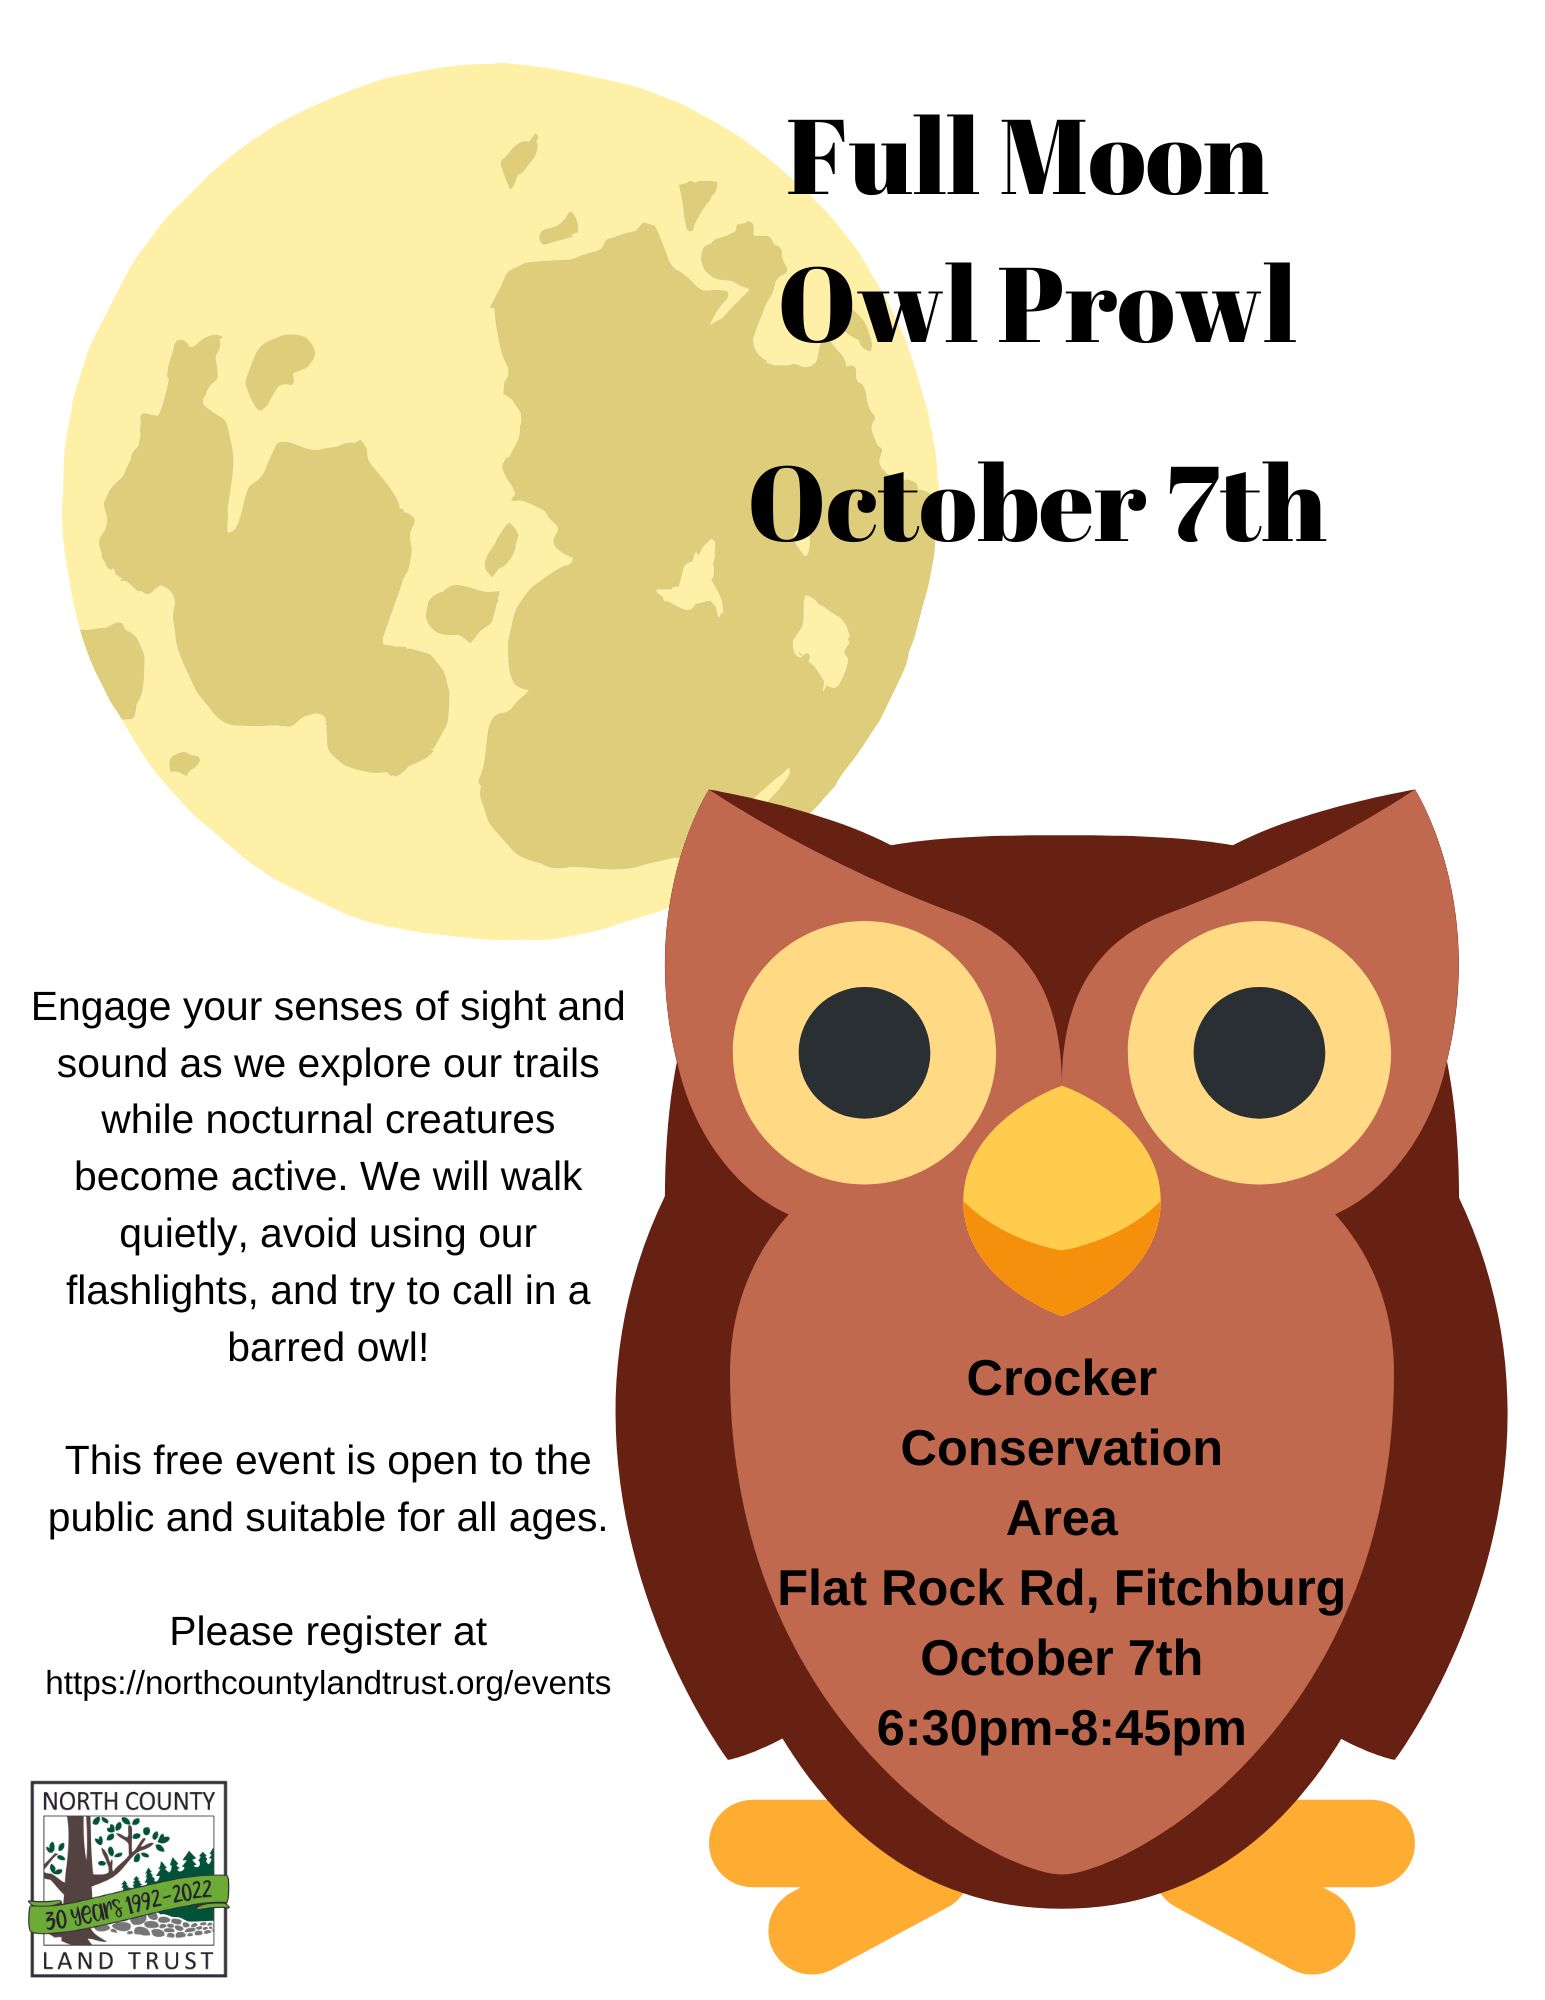 Full Moon Owl Prowl at Crocker